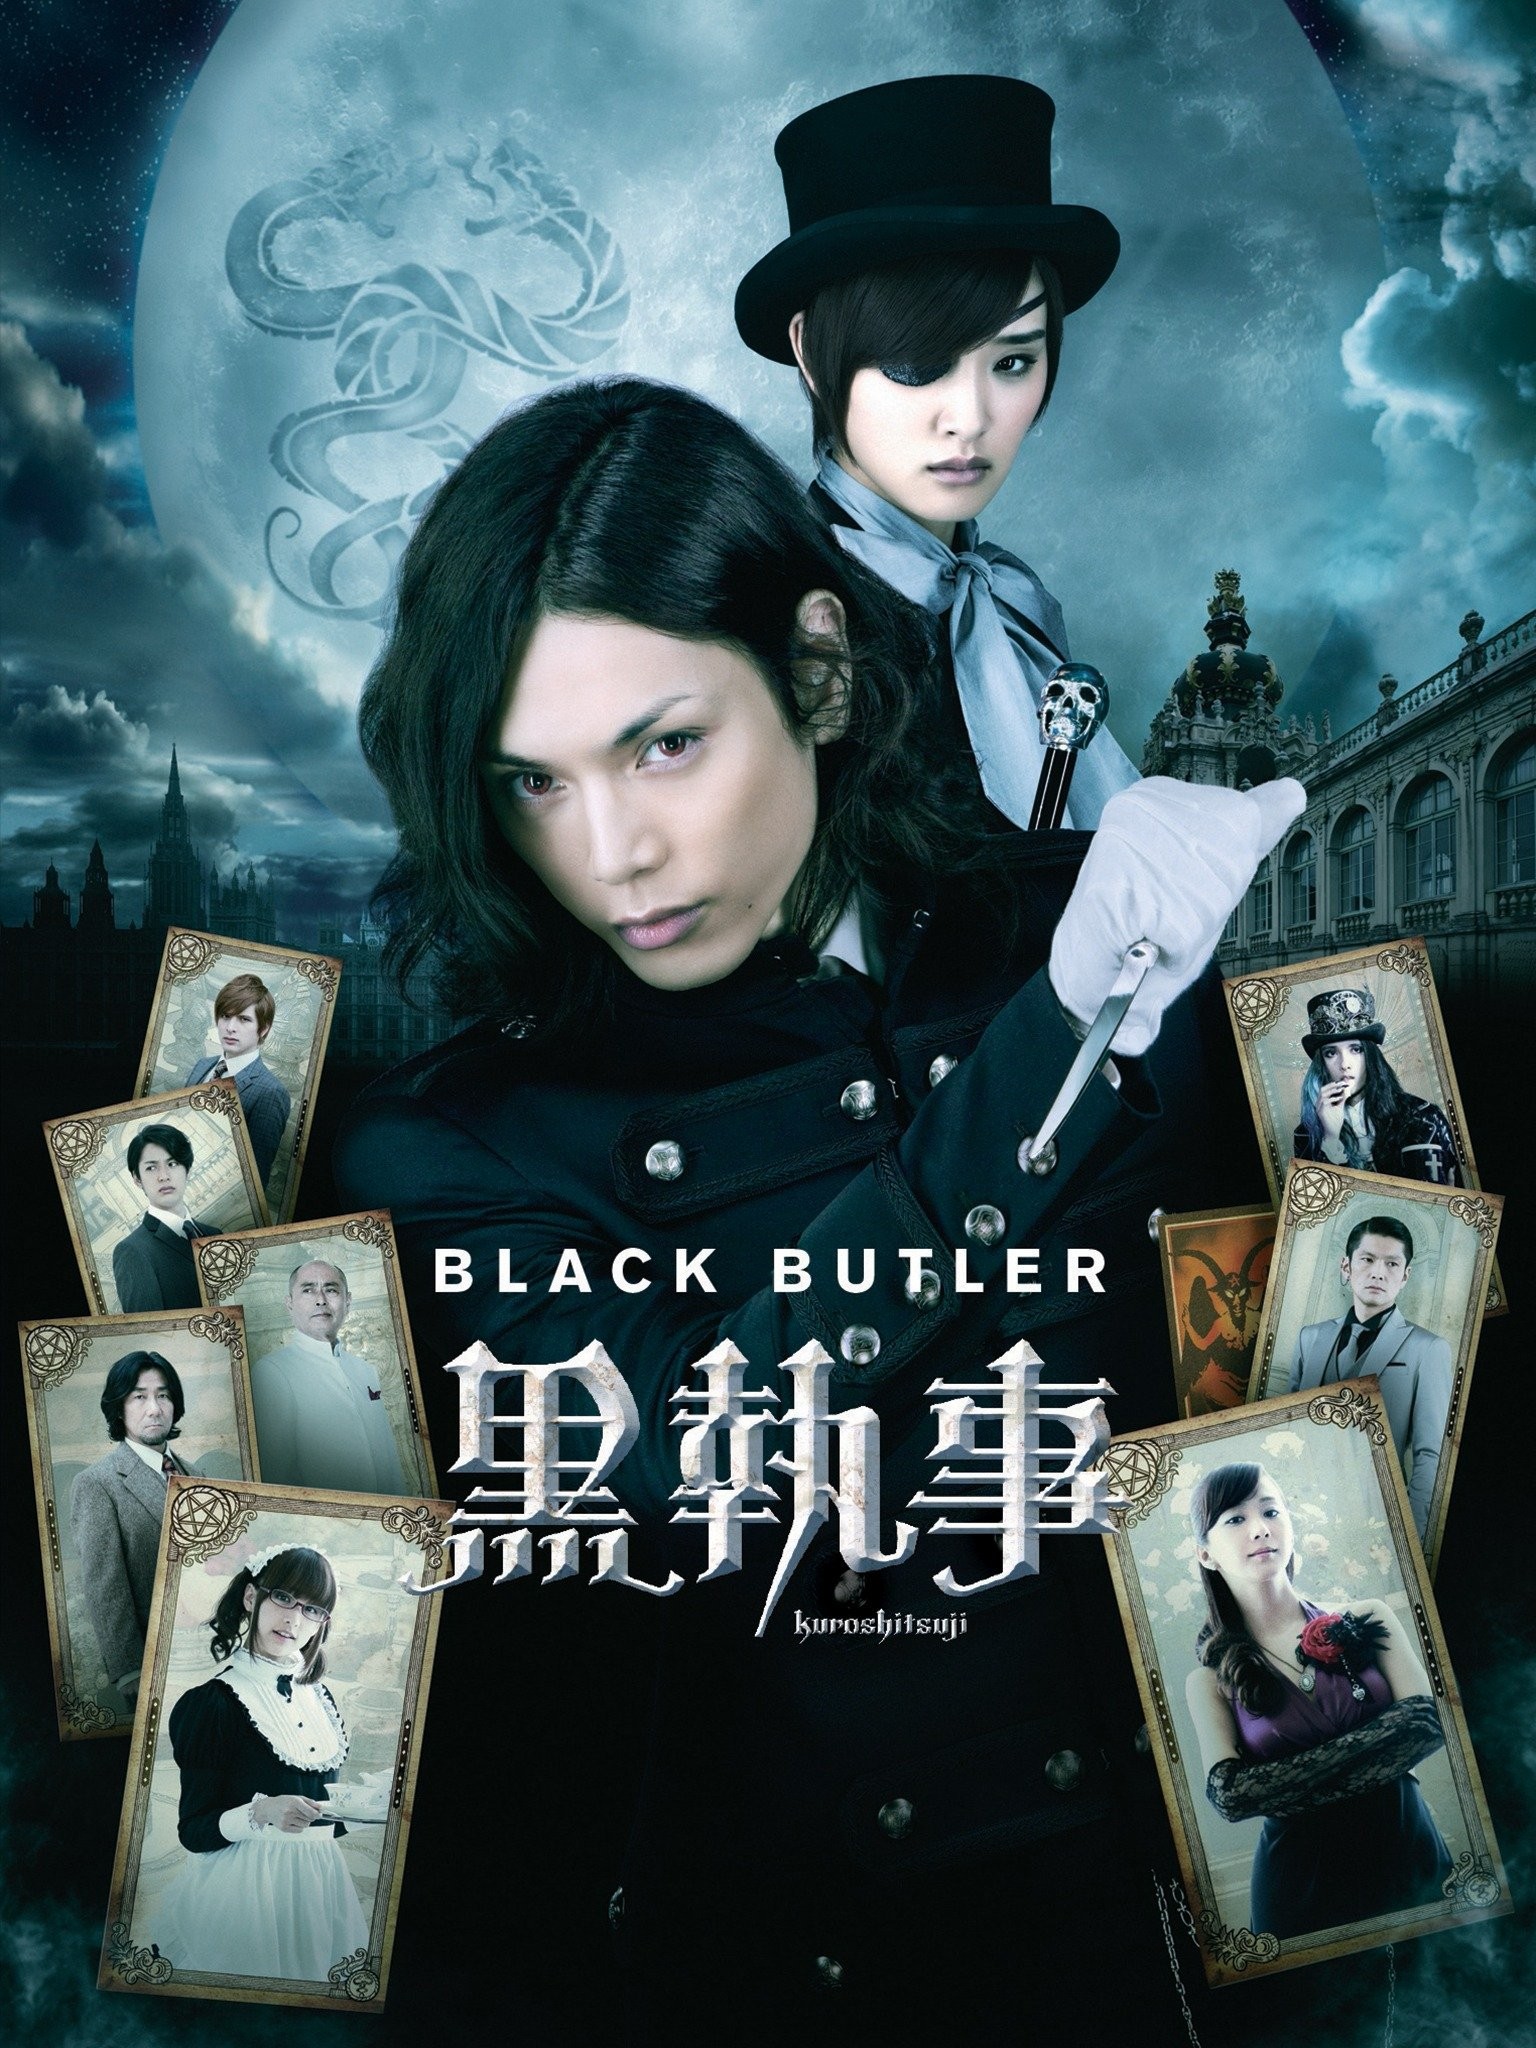 Black Butler - watch tv show streaming online